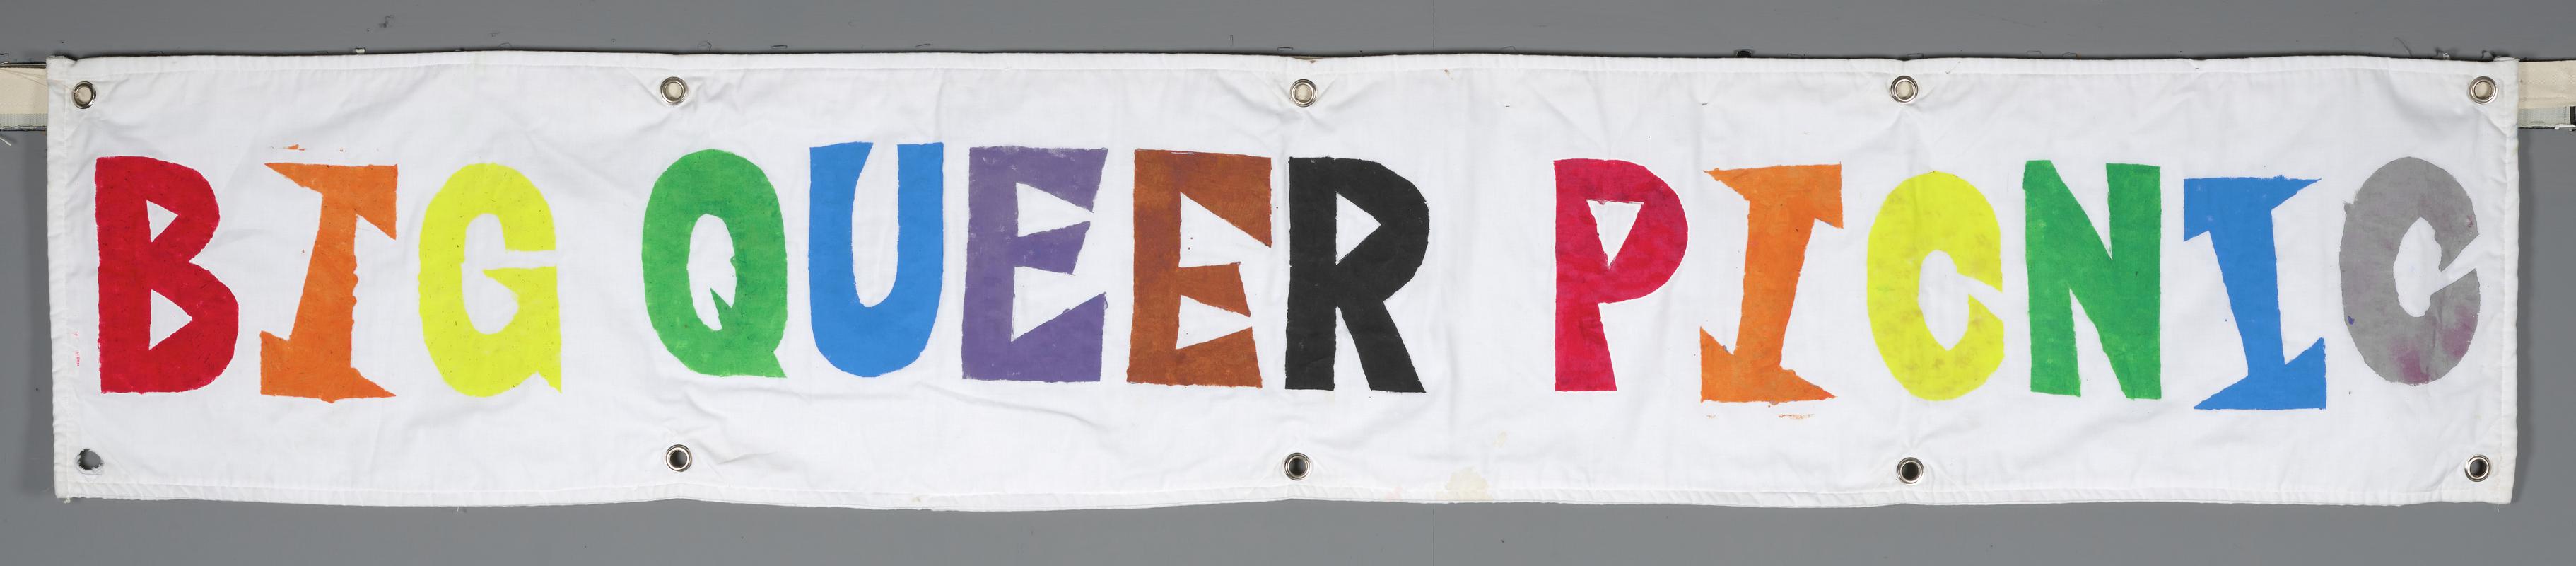 Big Queer Picnic banner